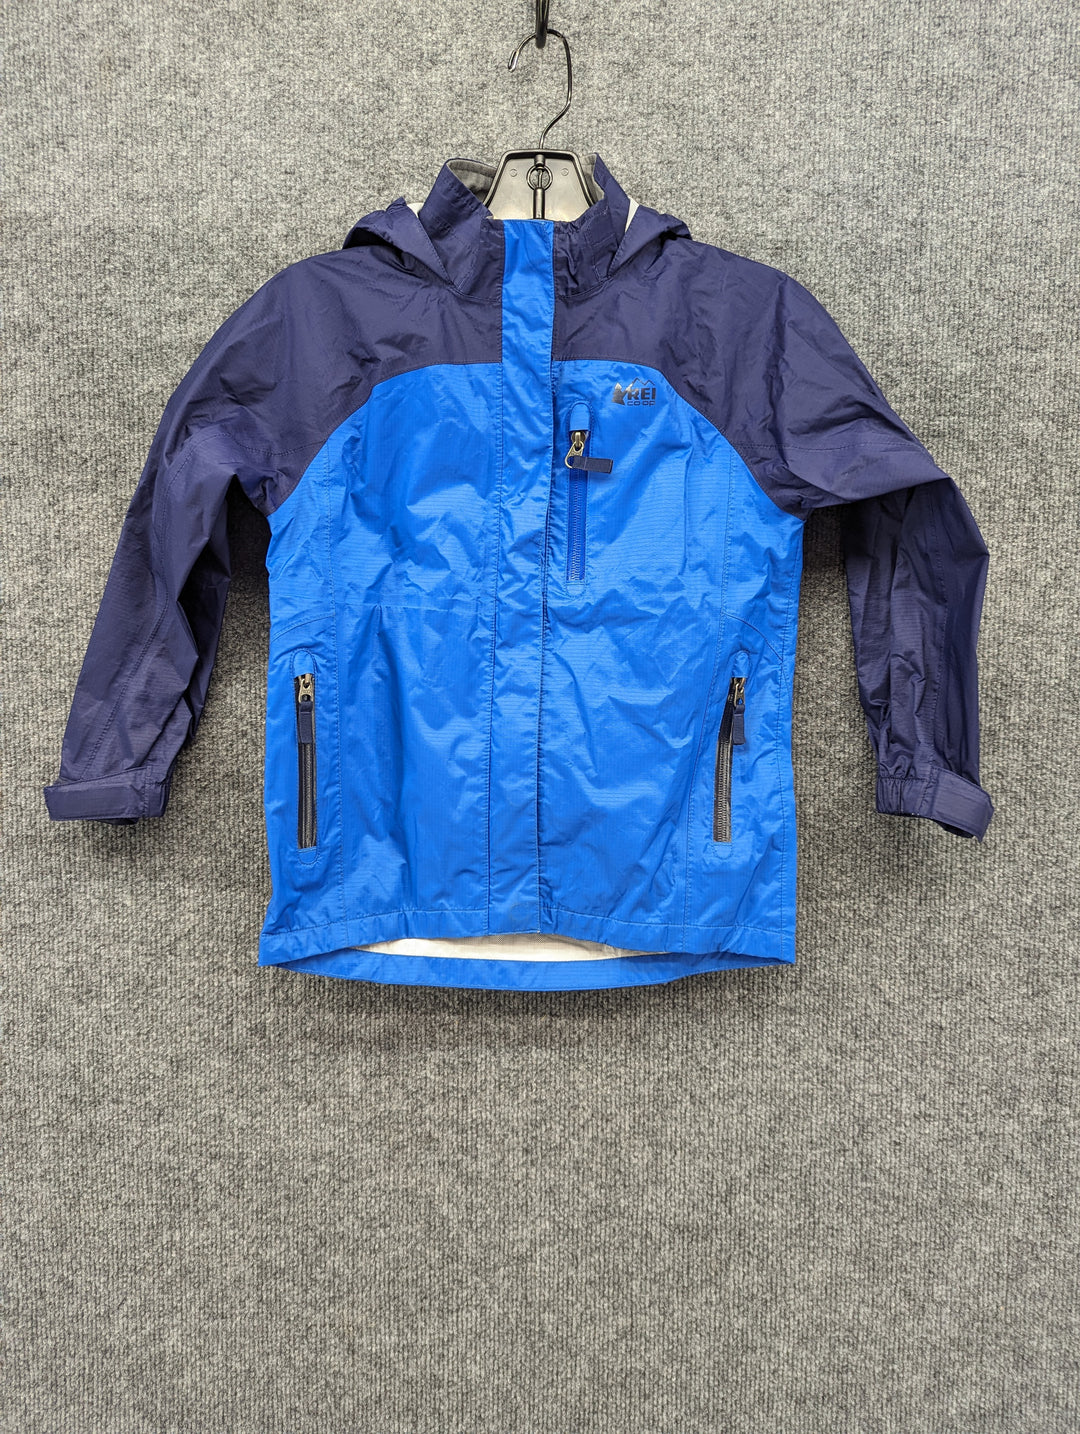 Vintage Louis Garneau Windbreaker Active Jacket Size Medium Blue